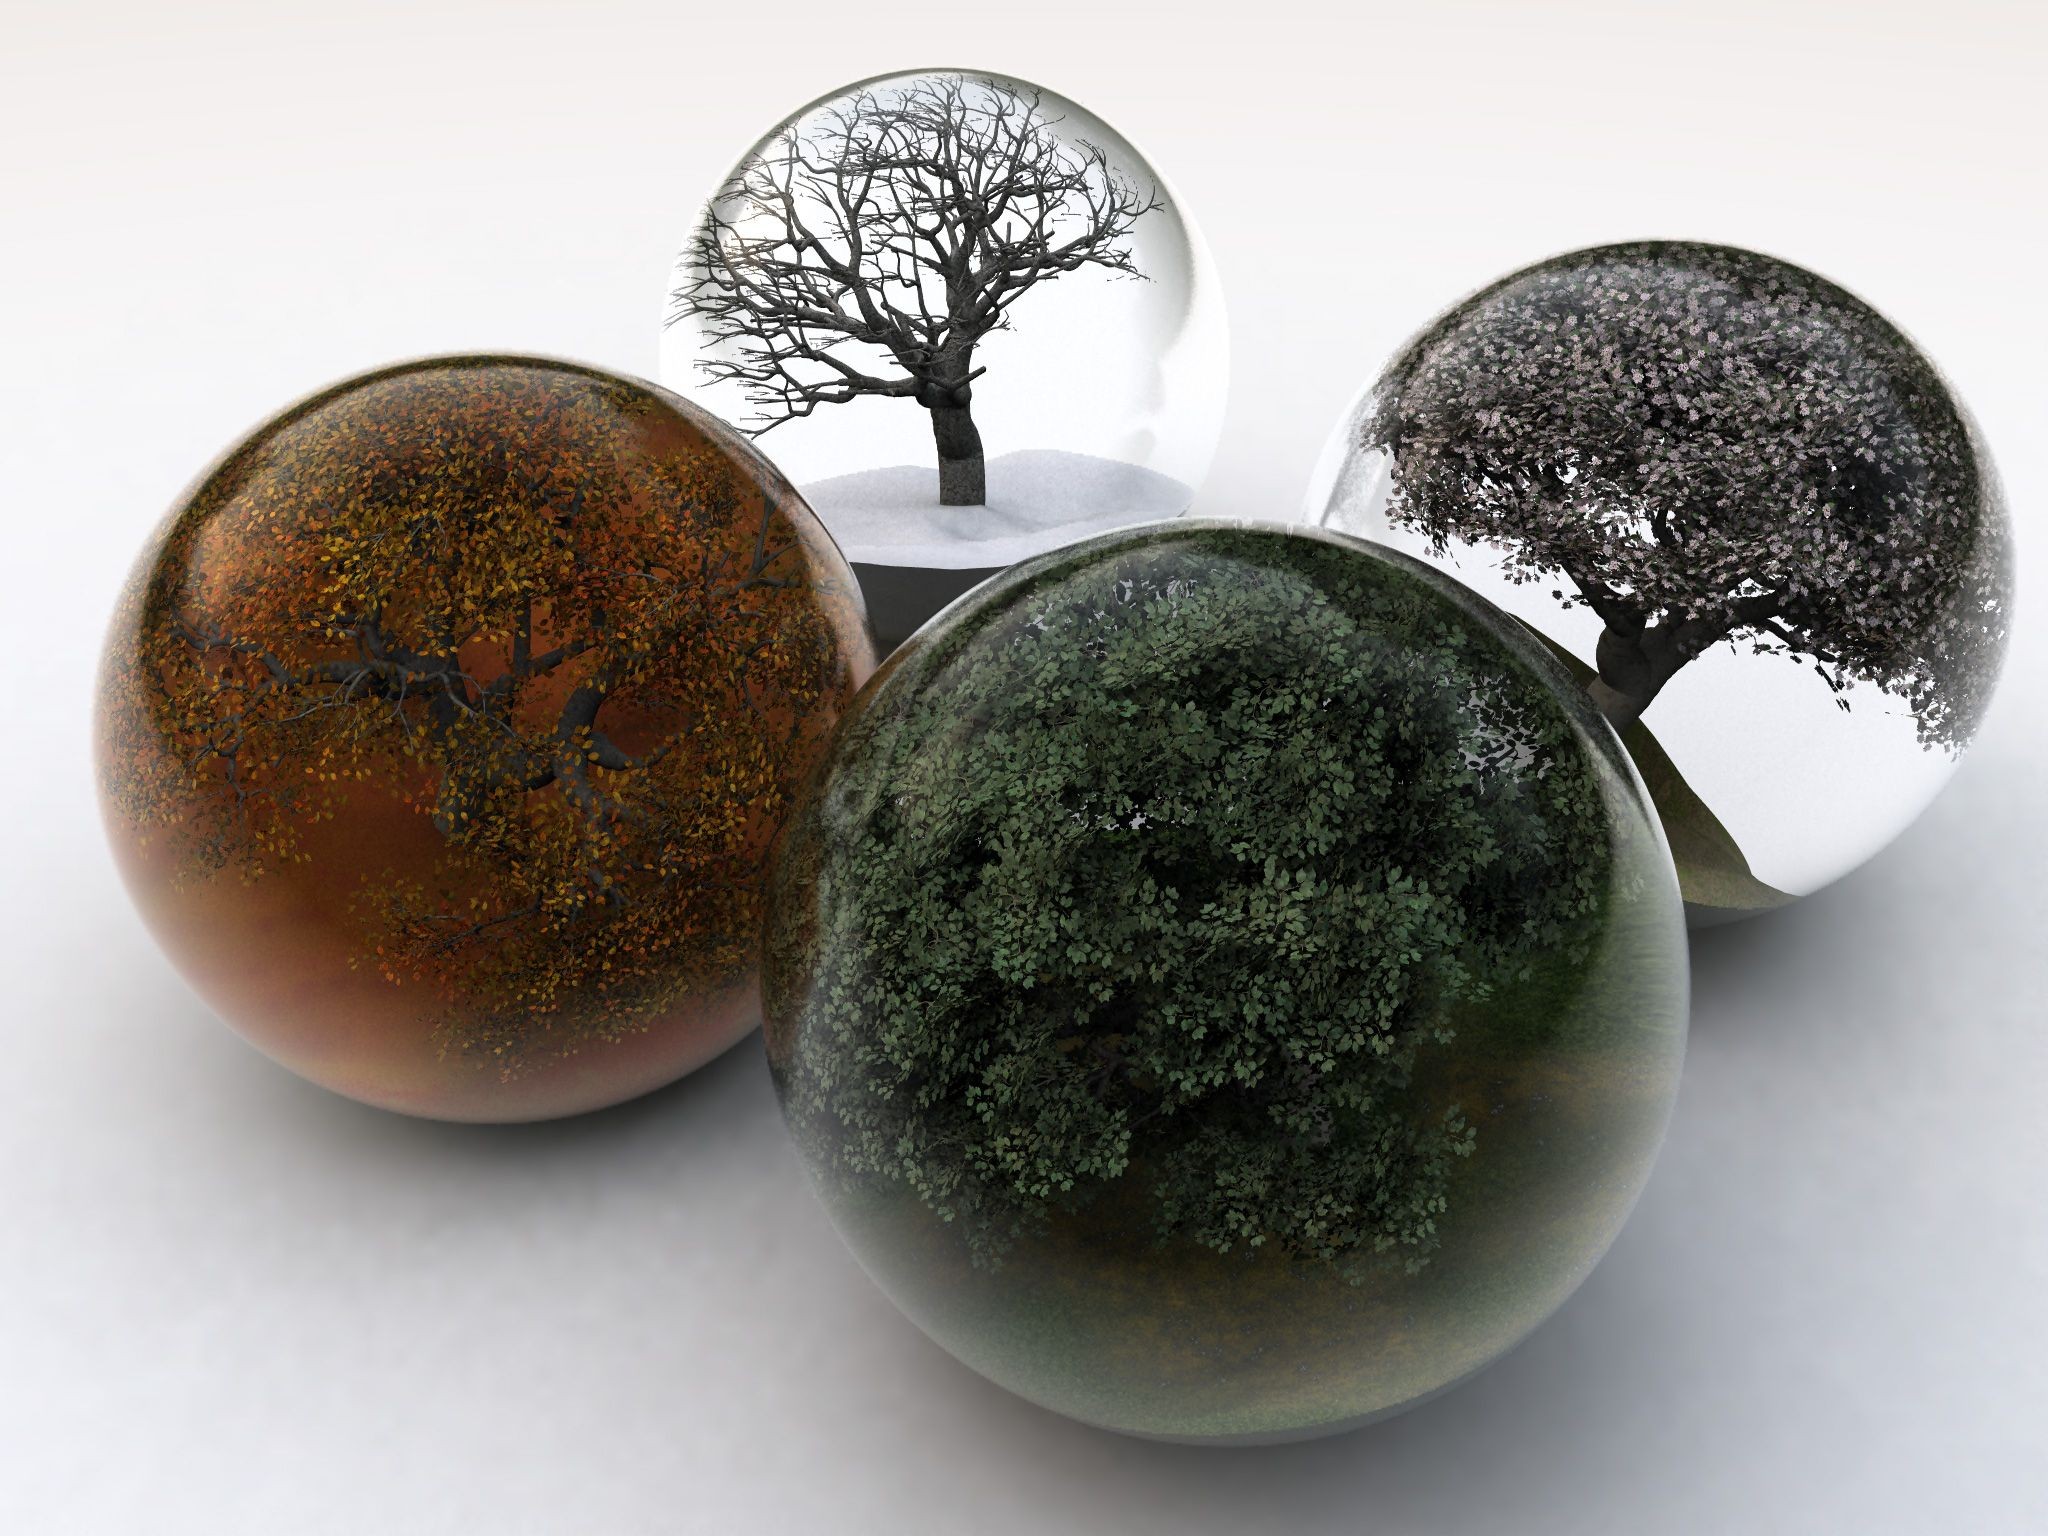 General 2048x1536 sphere trees photoshopped seasons digital art closeup simple background